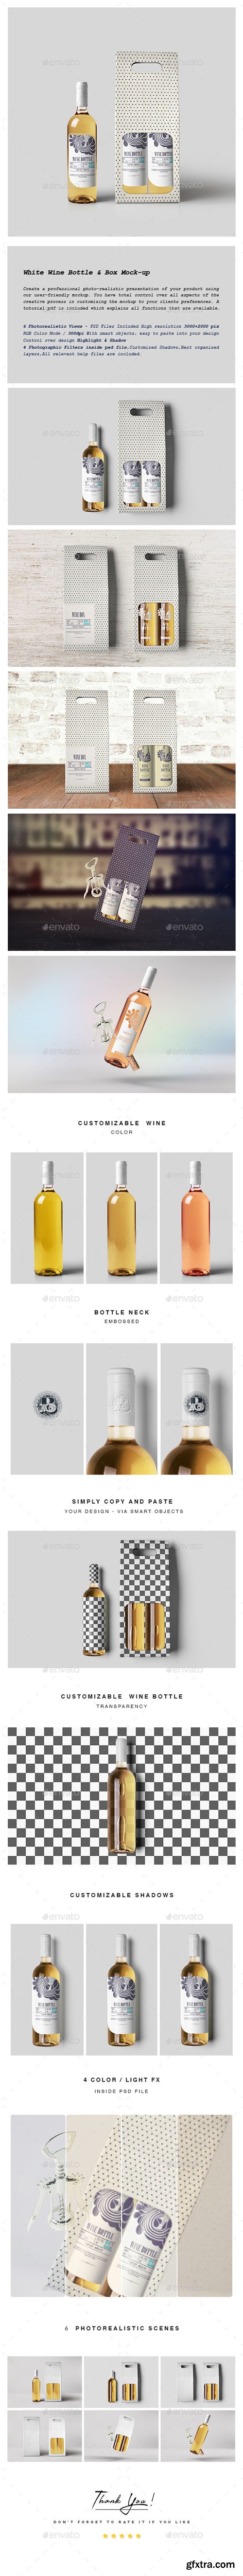 GR - White Wine Bottle and Box Mock-up 20442890